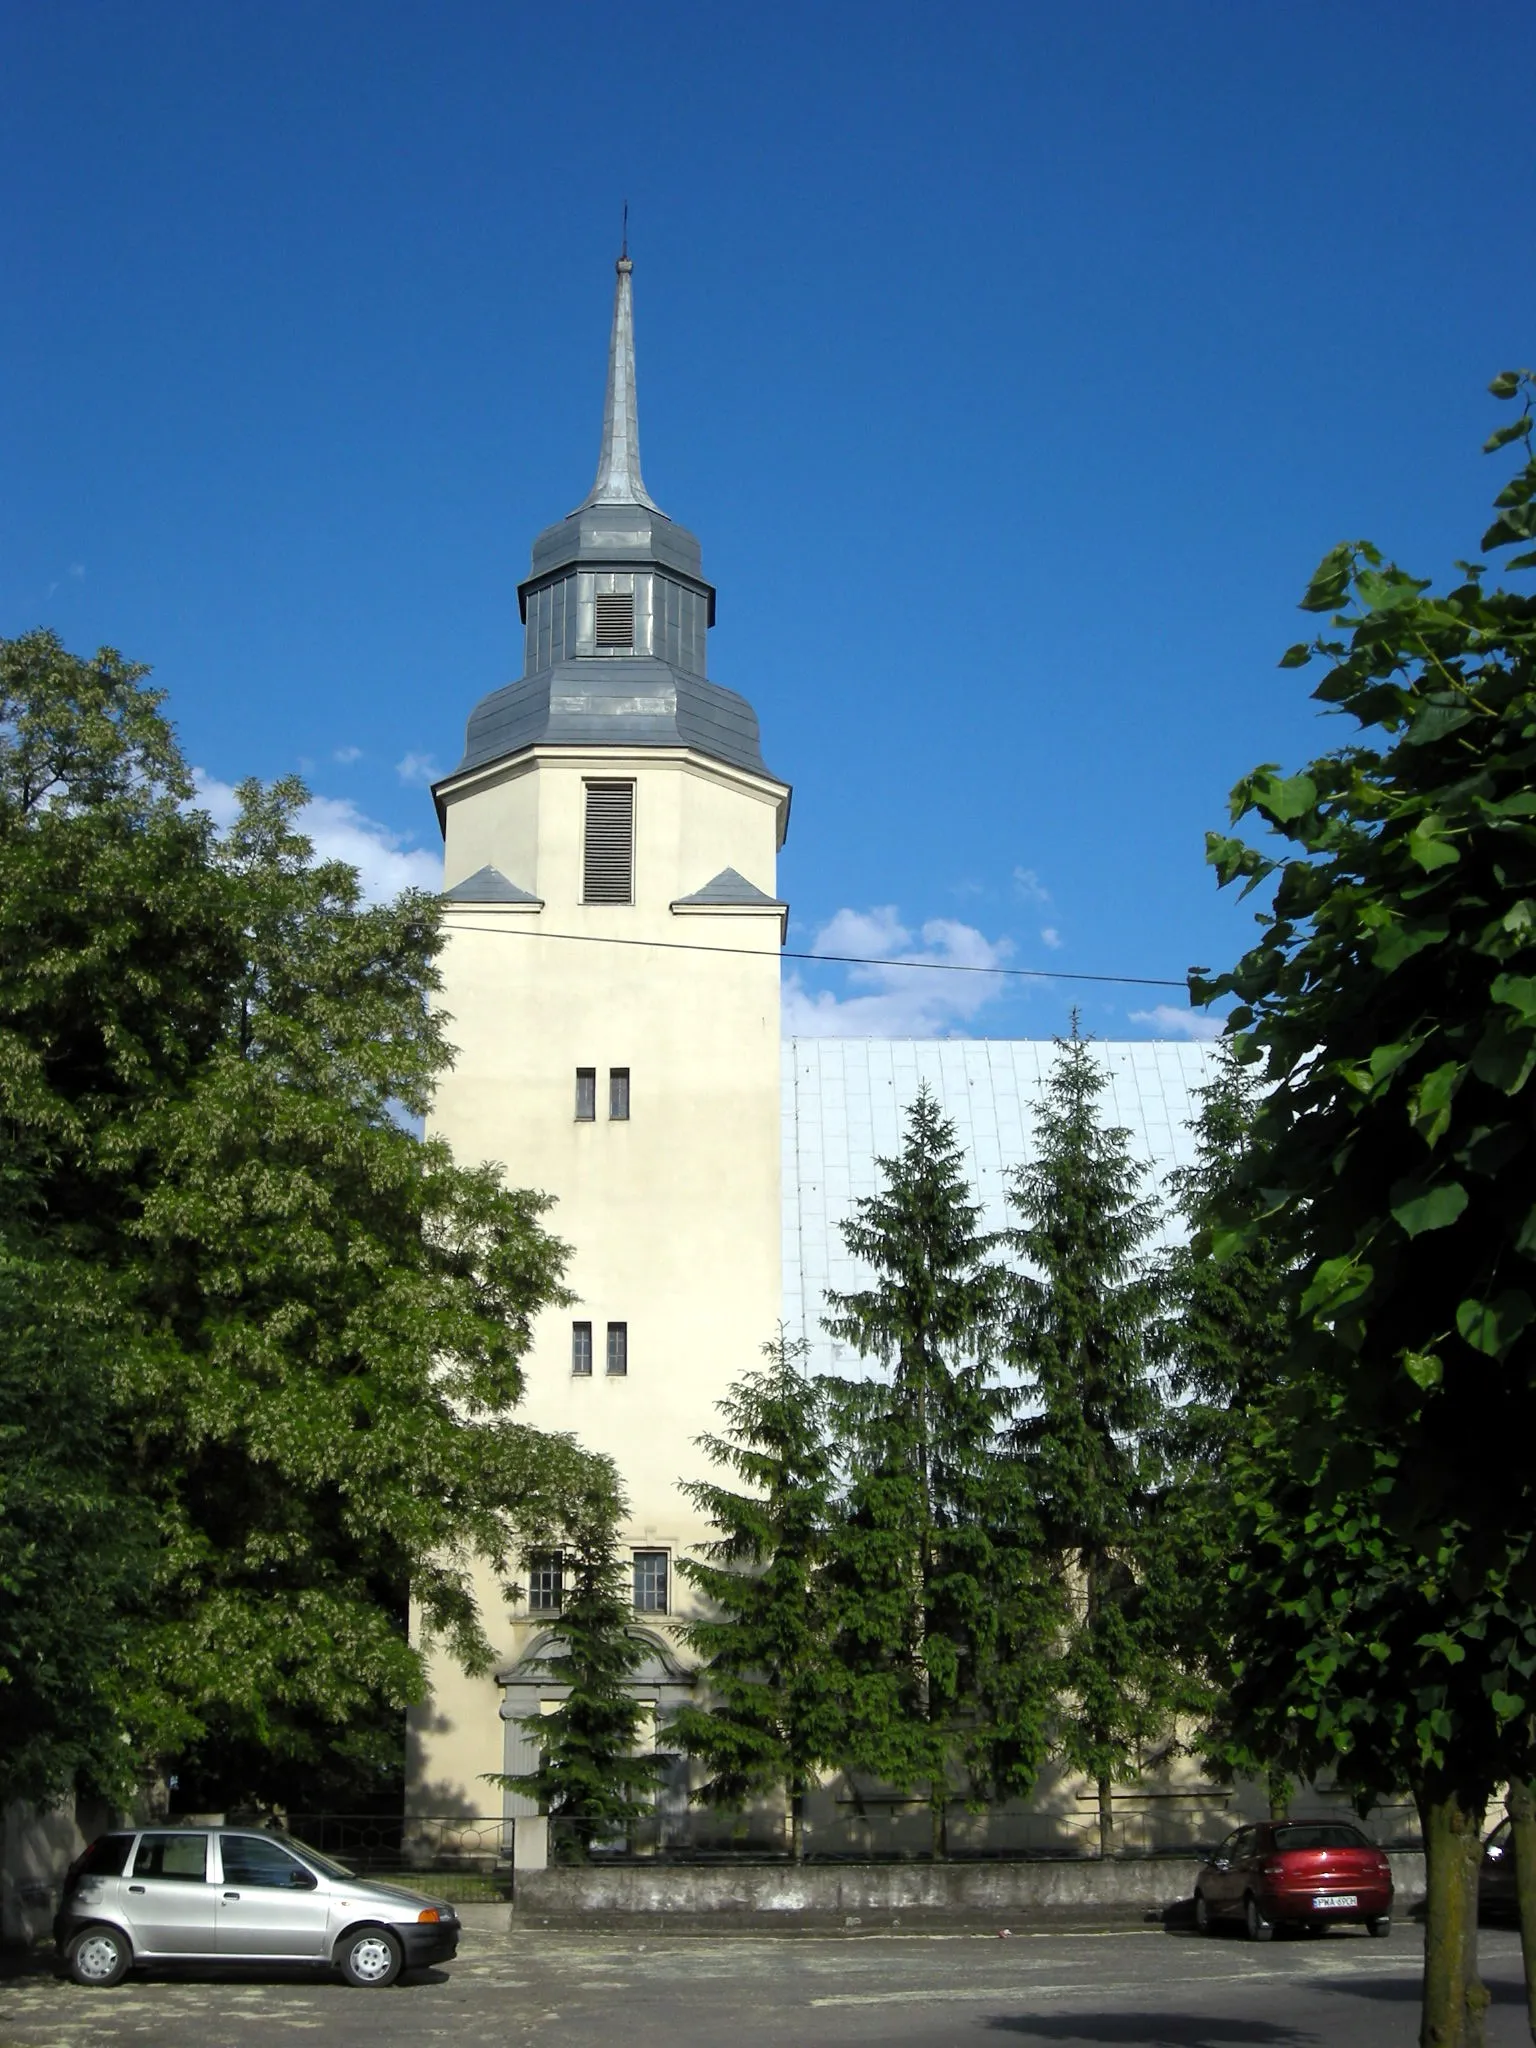 Photo showing: The church in Damasławek, Poland.